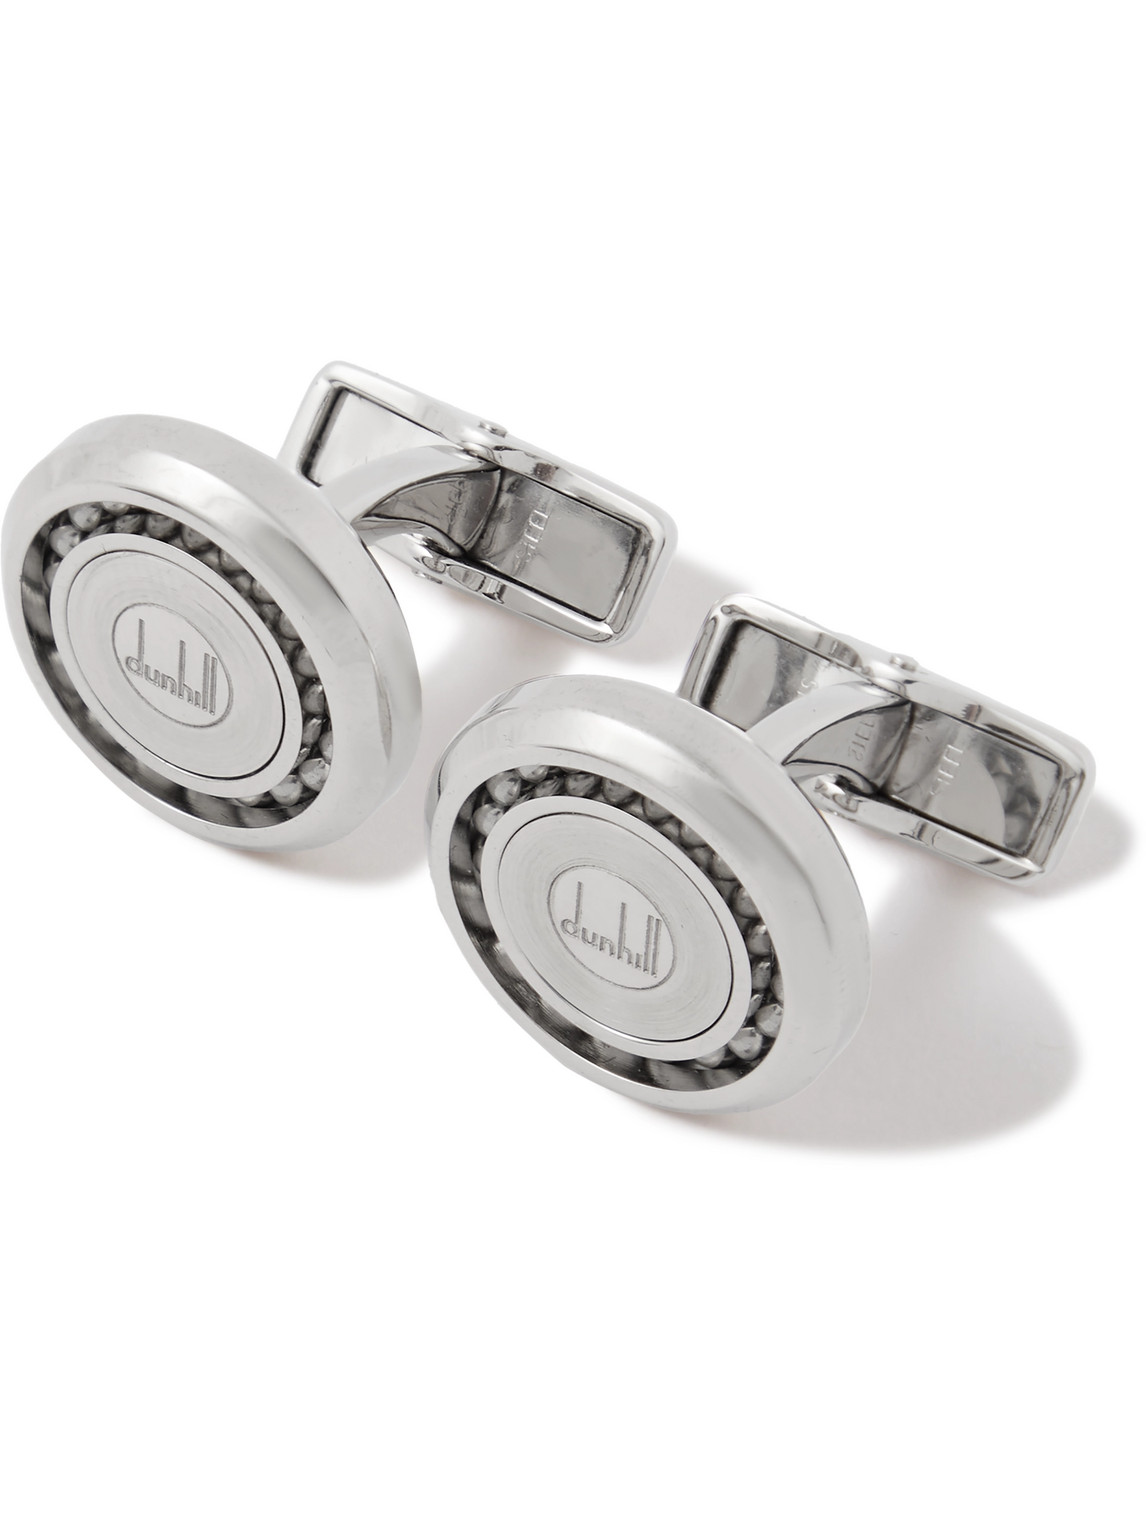 Dunhill - Logo-Engraved Silver-Tone Cufflinks - Men - Silver von Dunhill